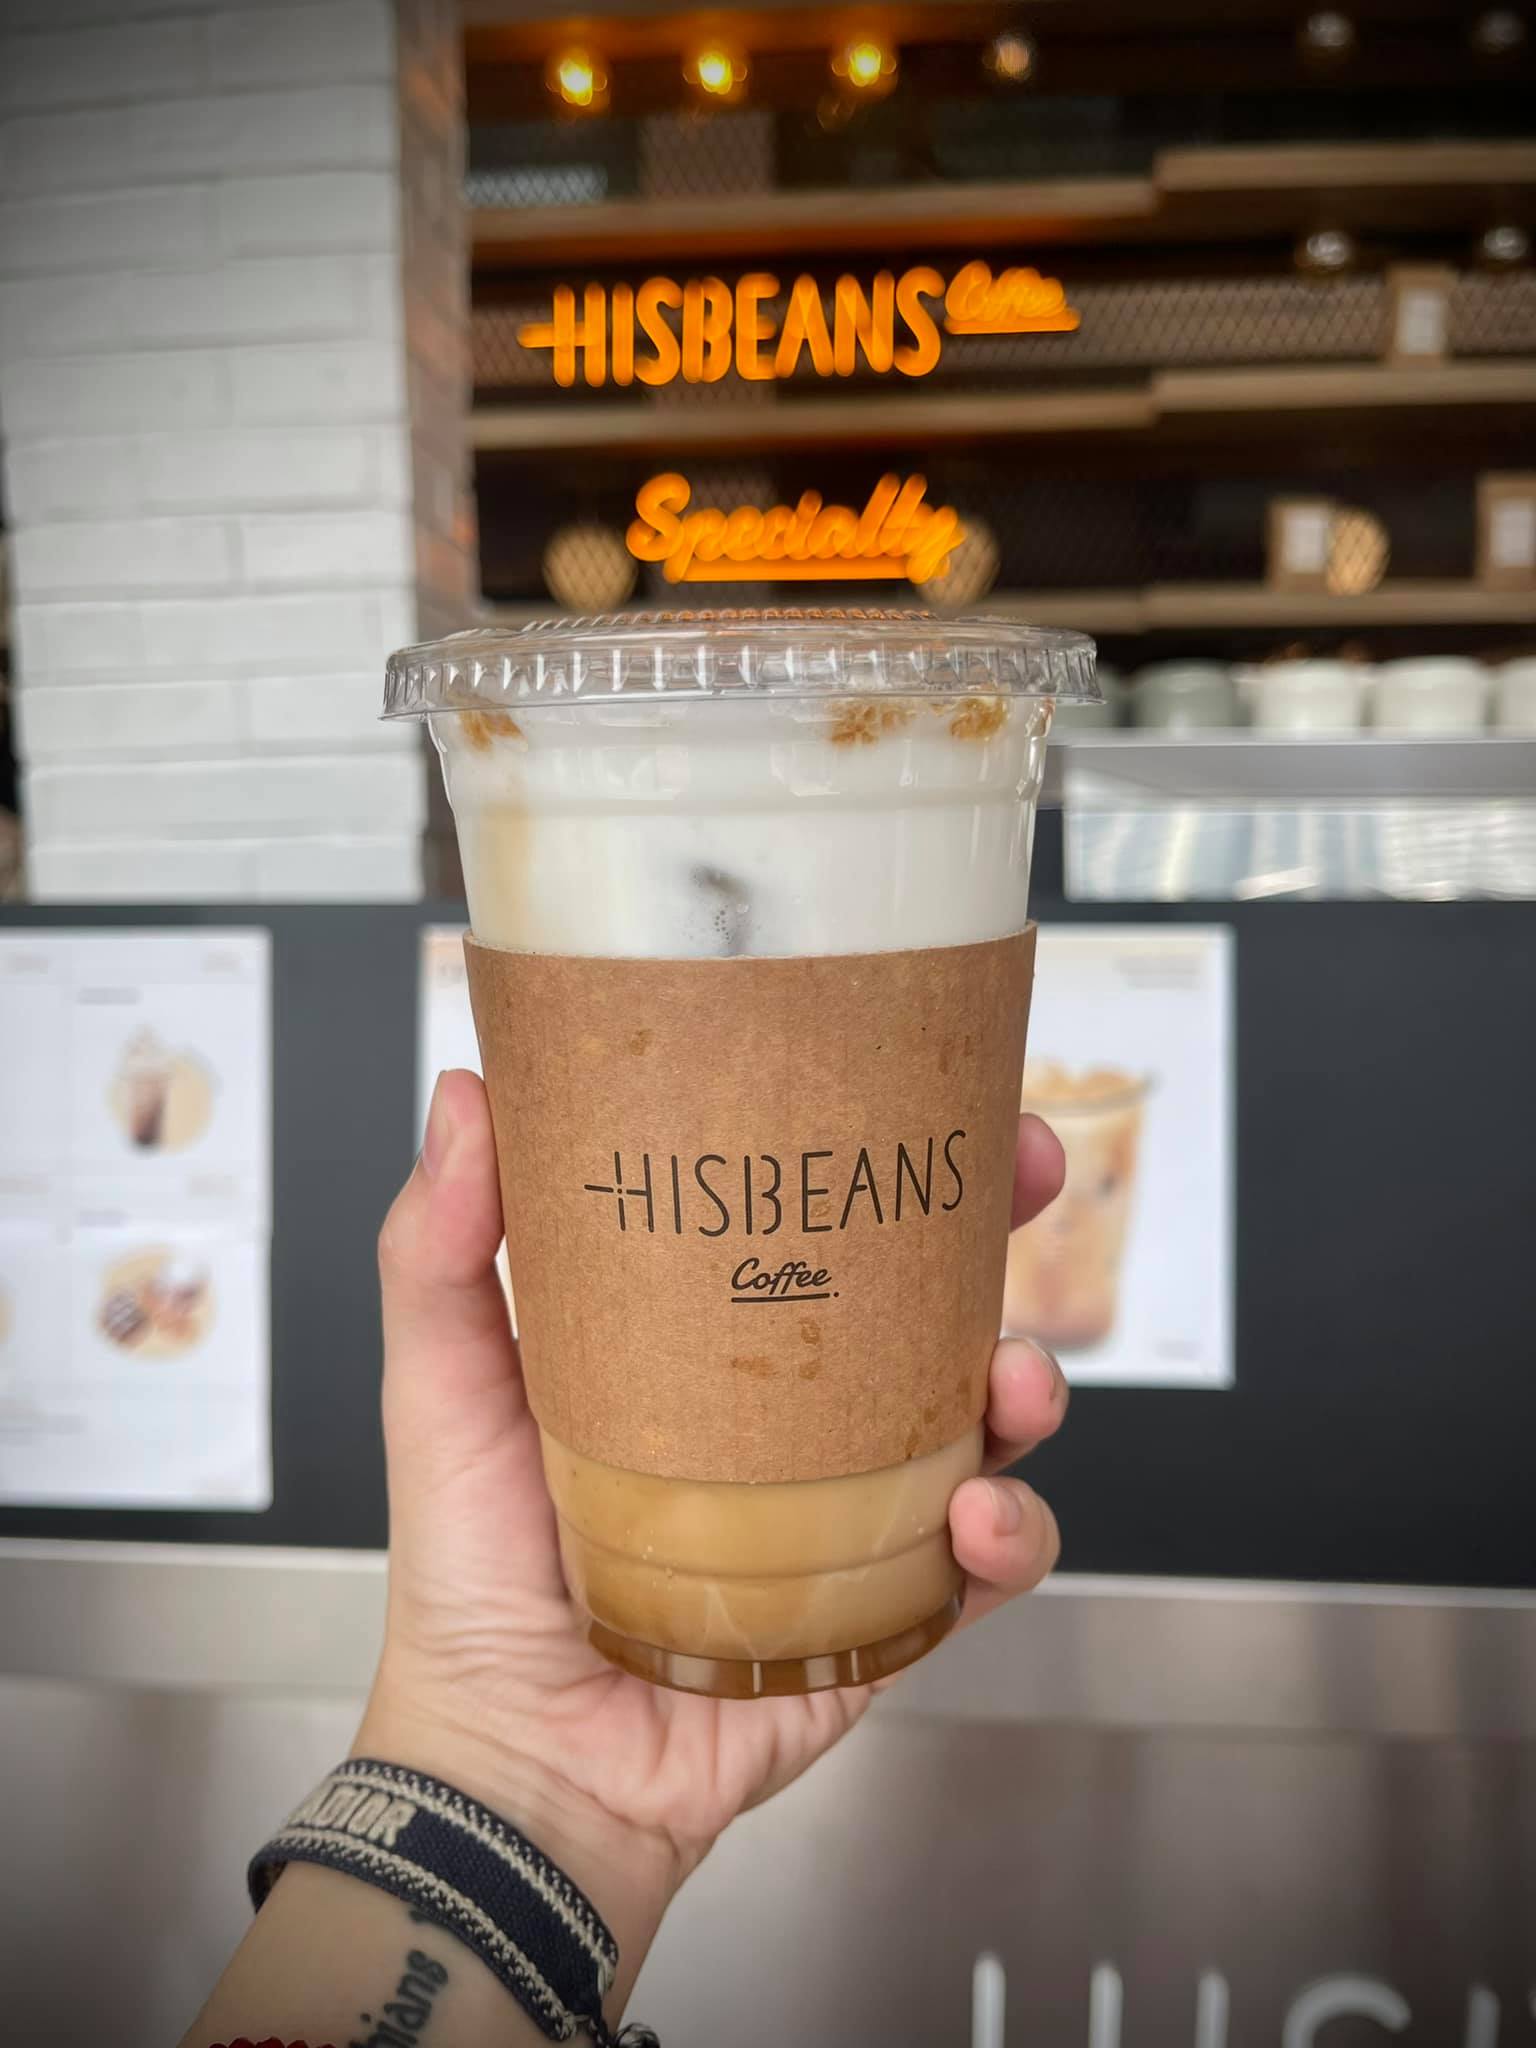 HISBEANS Coffee - iced coffee